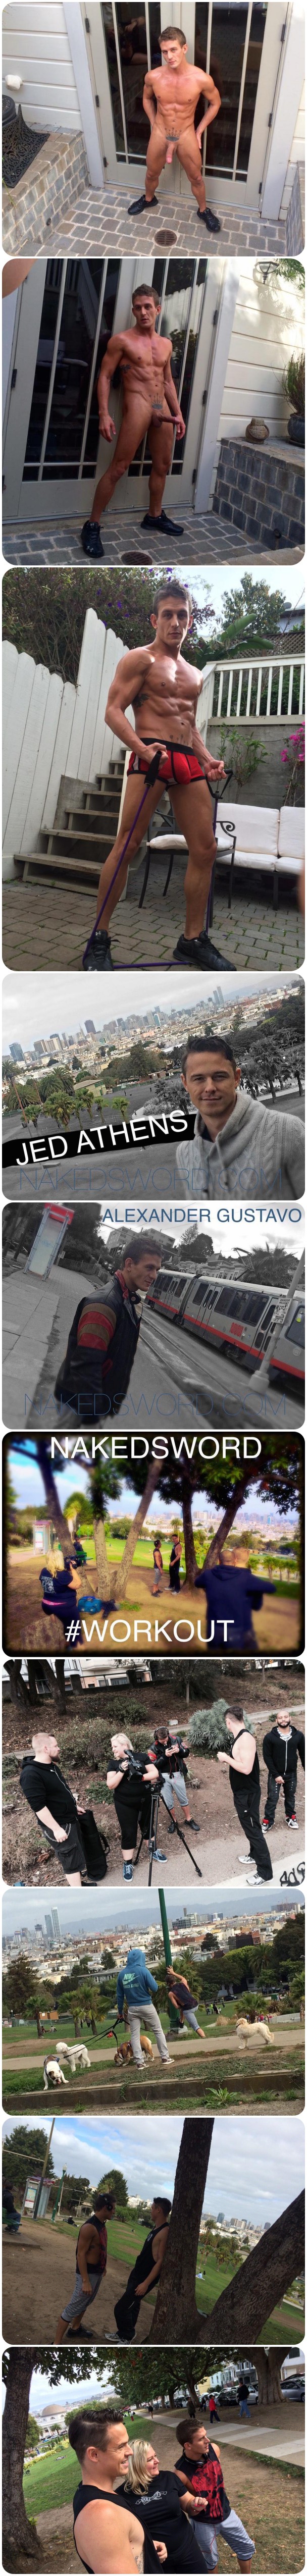 1-nakedsword-workout-jed-athens-alexander-gustavo